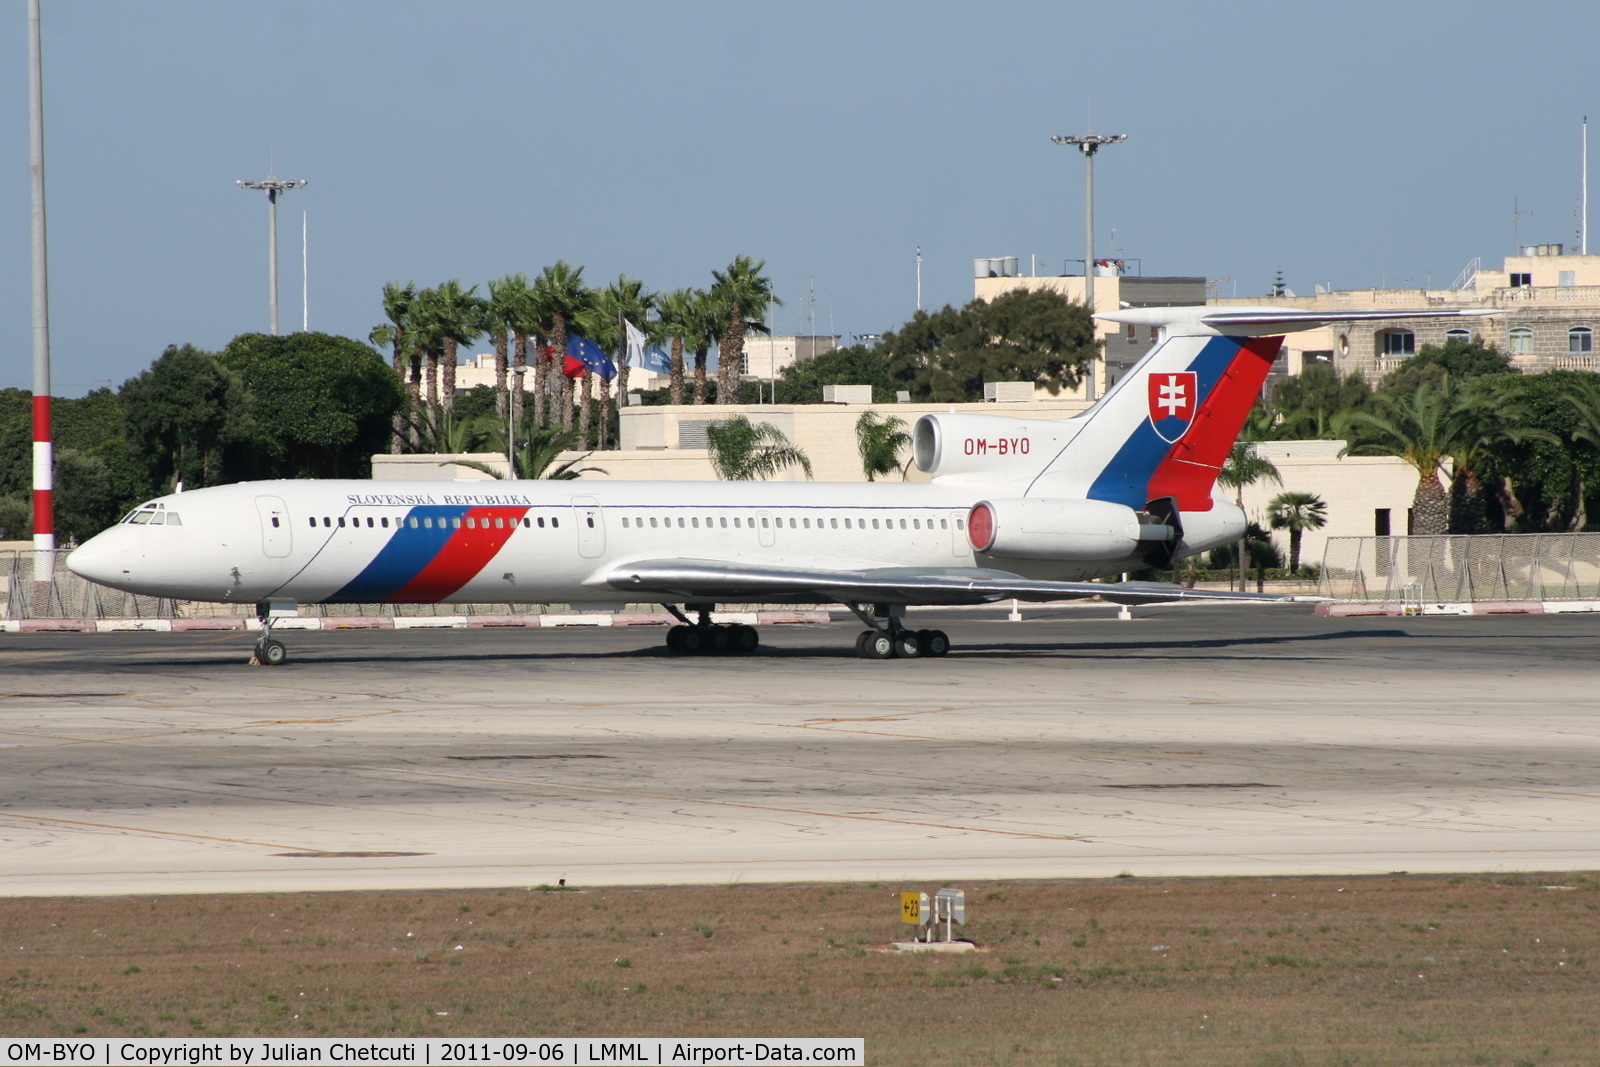 OM-BYO, 1989 Tupolev Tu-154M C/N 89A803, Aircraft brought Slovak delegation to Malta